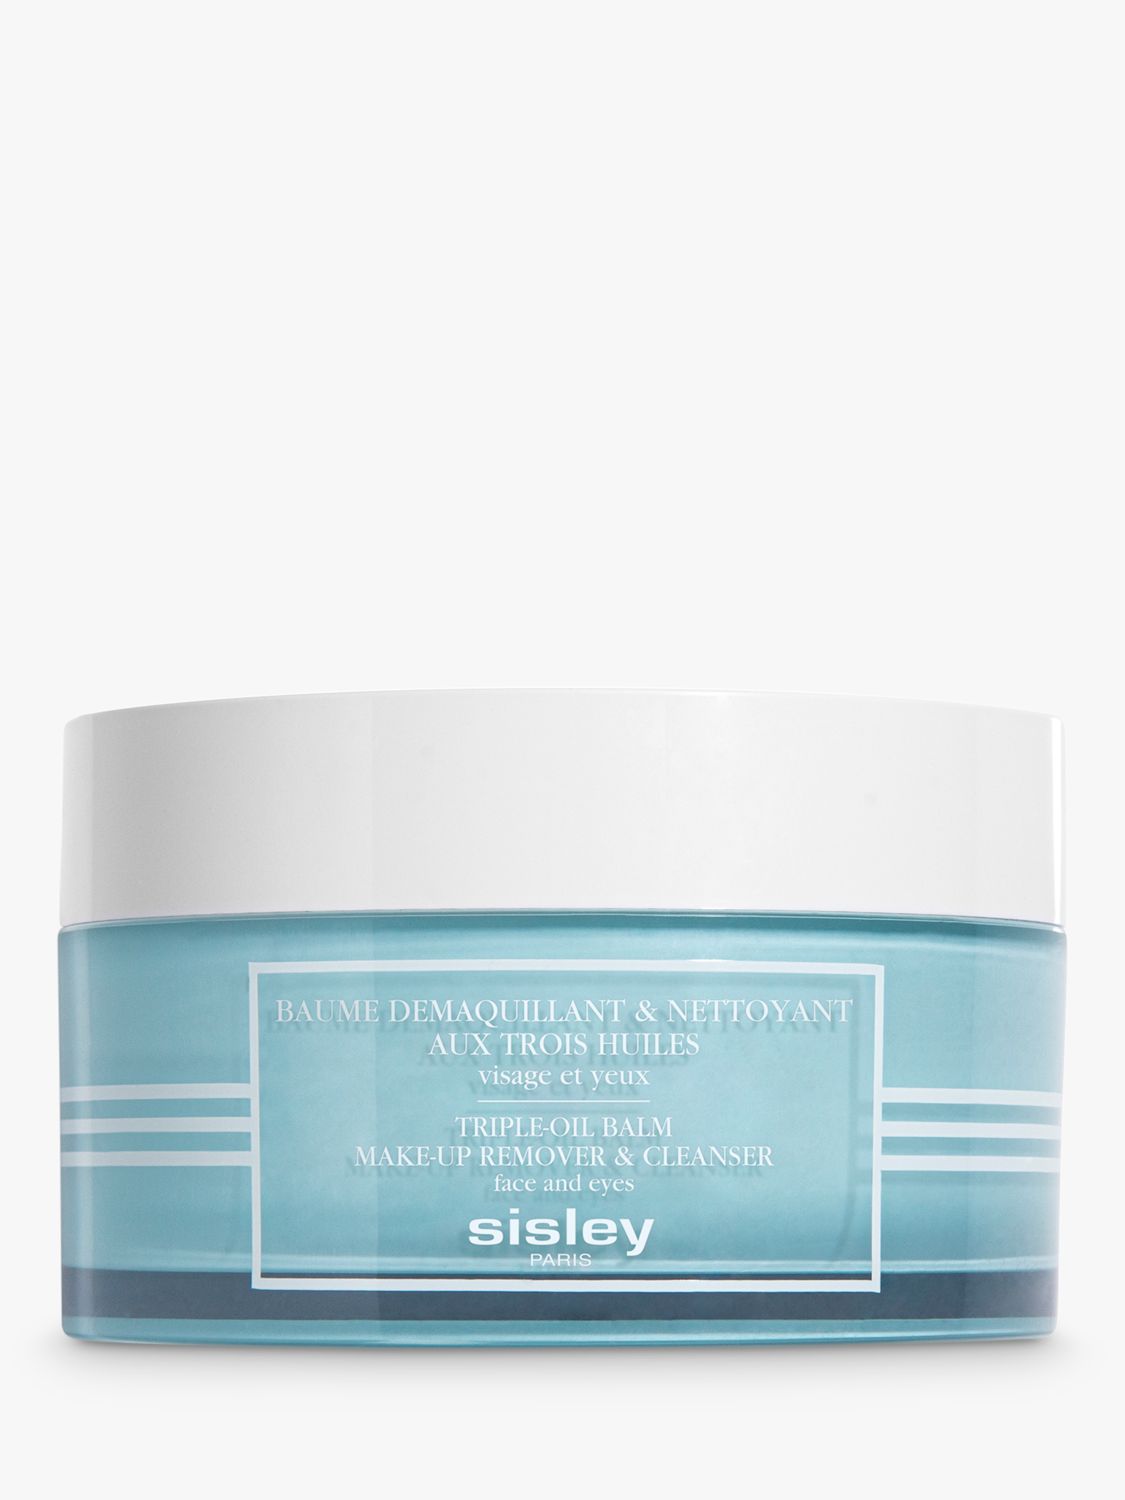 Sisley-Paris Triple Oil Balm Makeup Remover & Cleanser Face & Eyes, 130ml 1